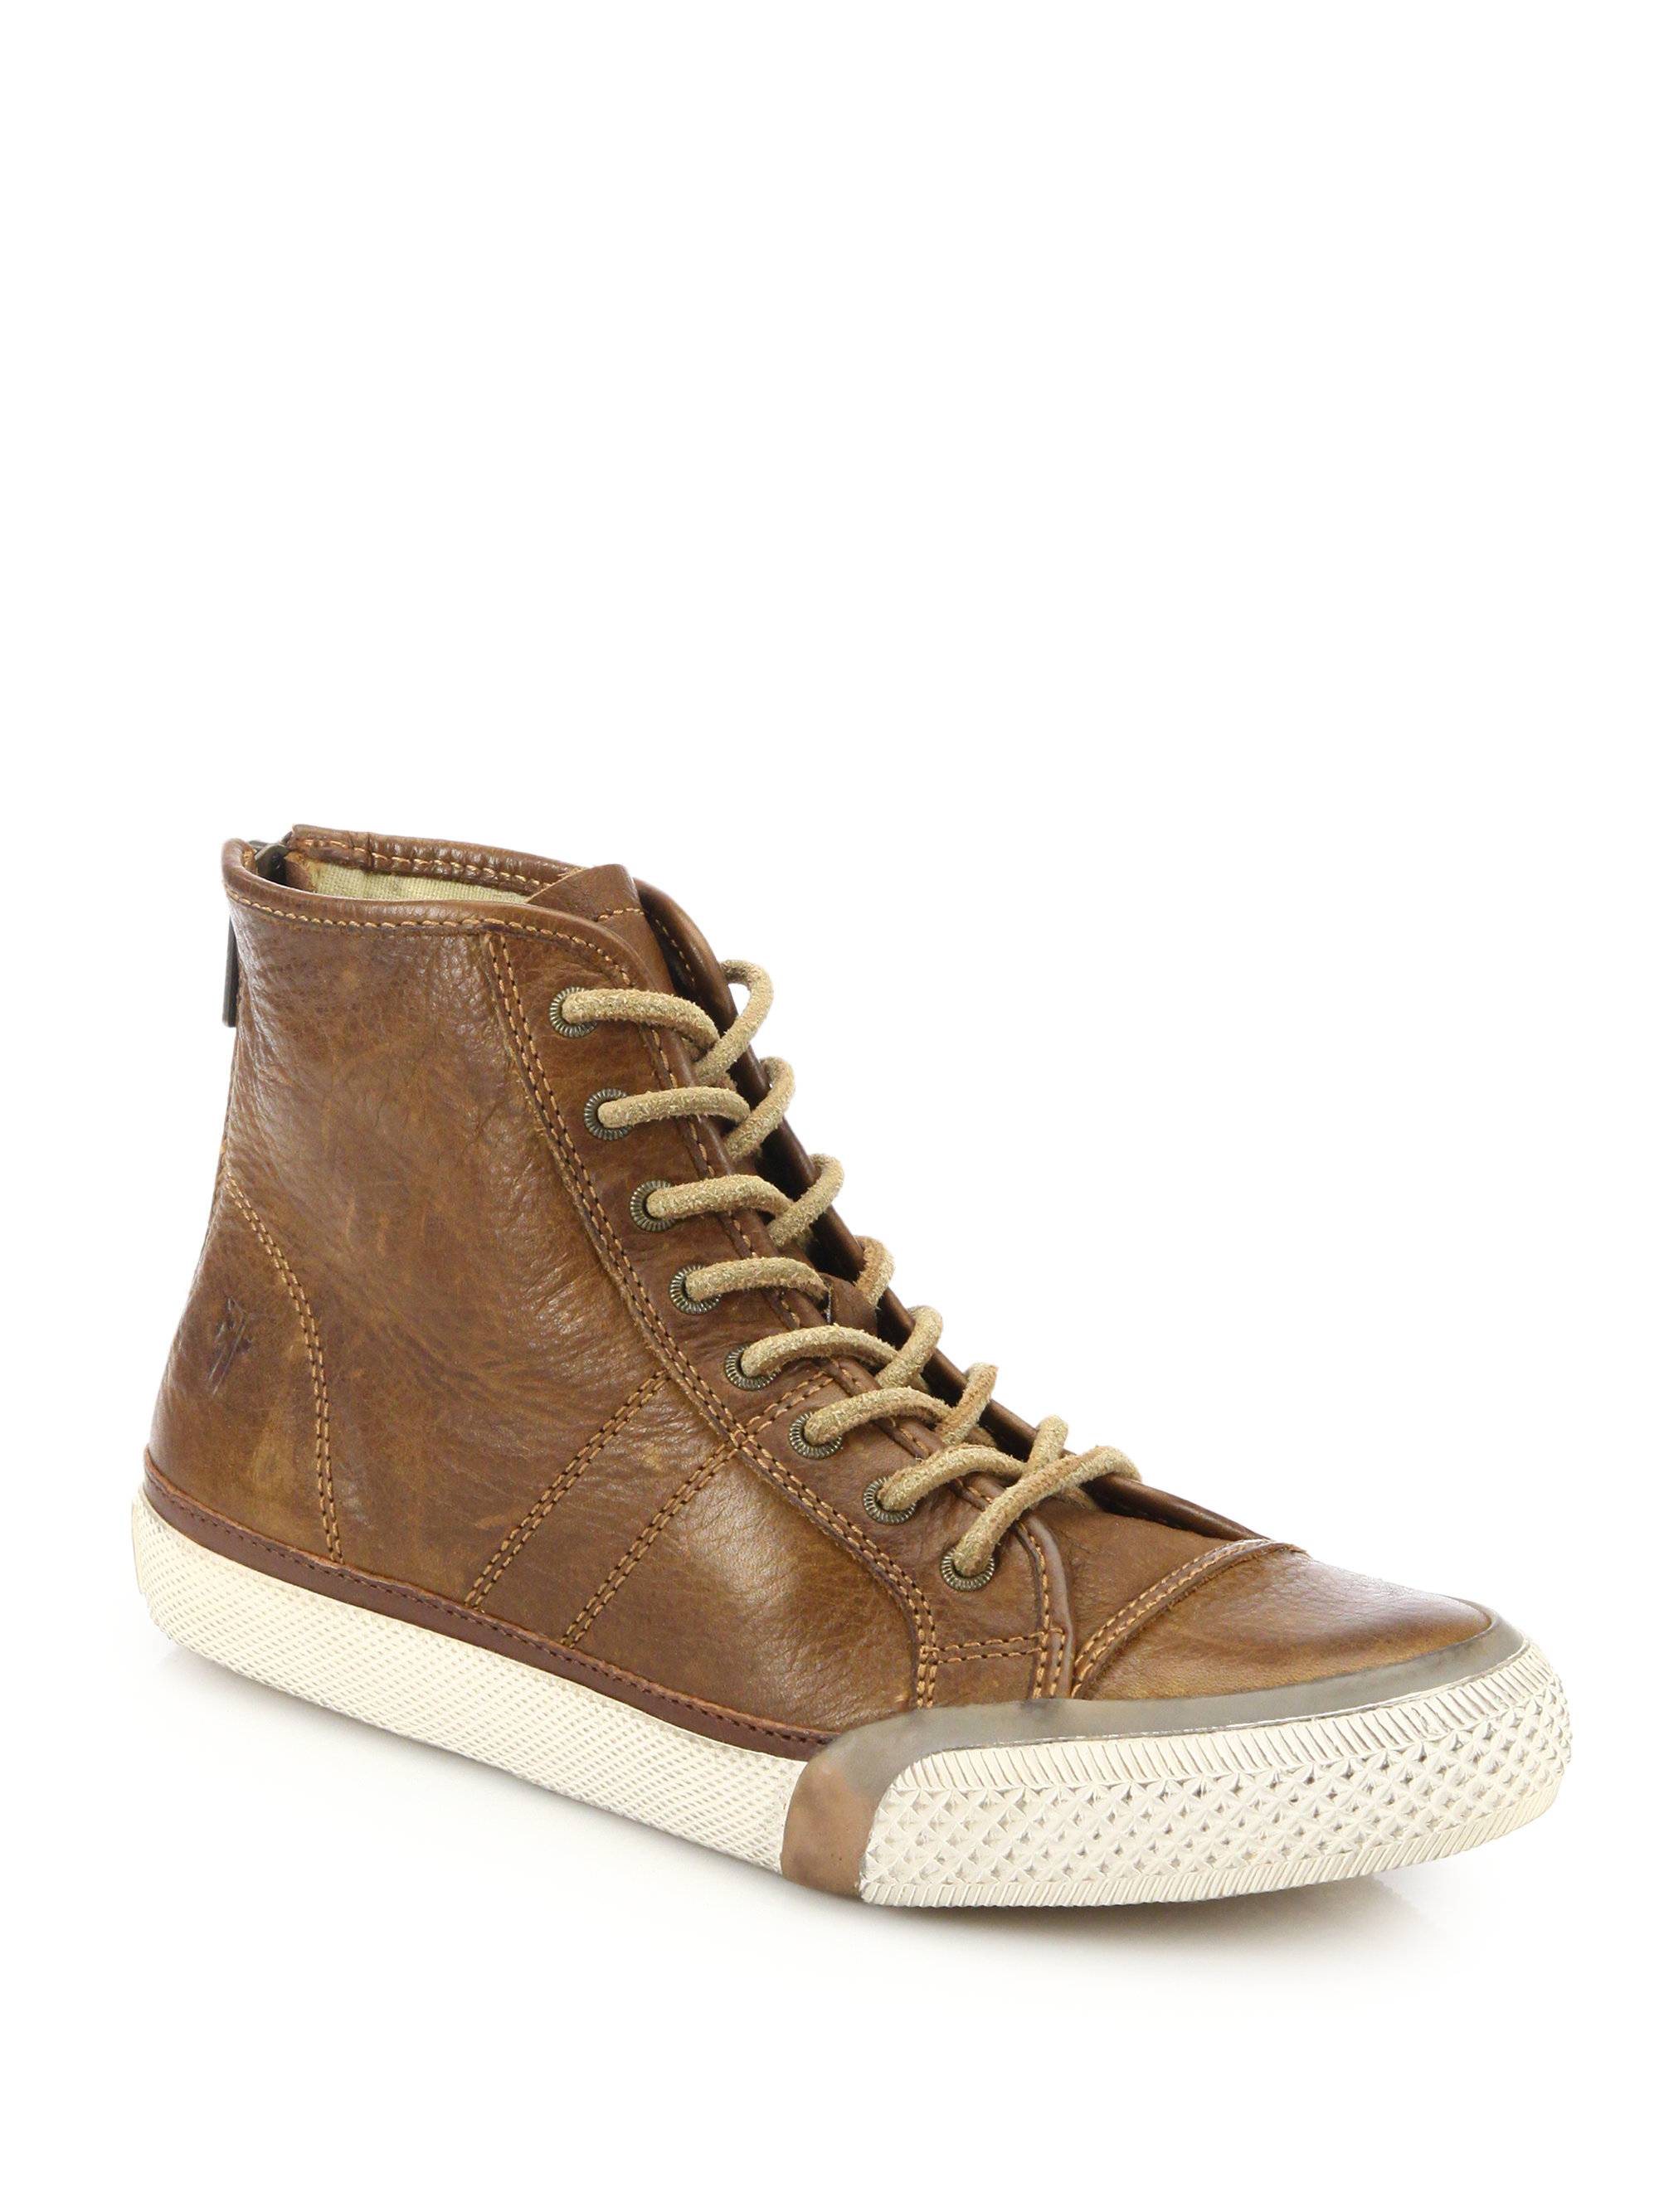 Frye Greene Leather Back-Zip High-Top Sneakers in Brown | Lyst